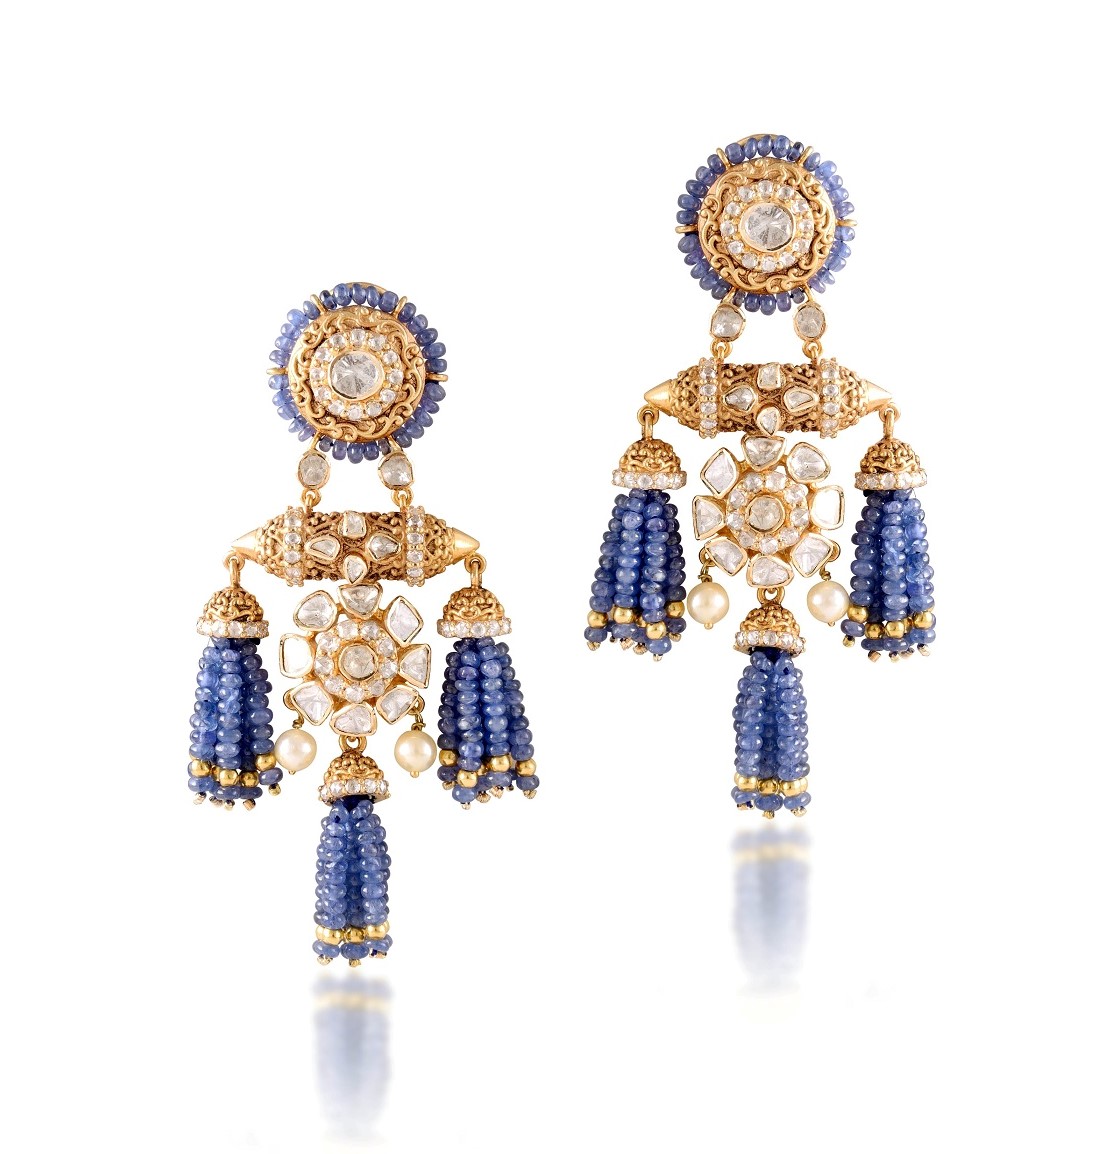 top 5 earrings: traditional earrings for wedding